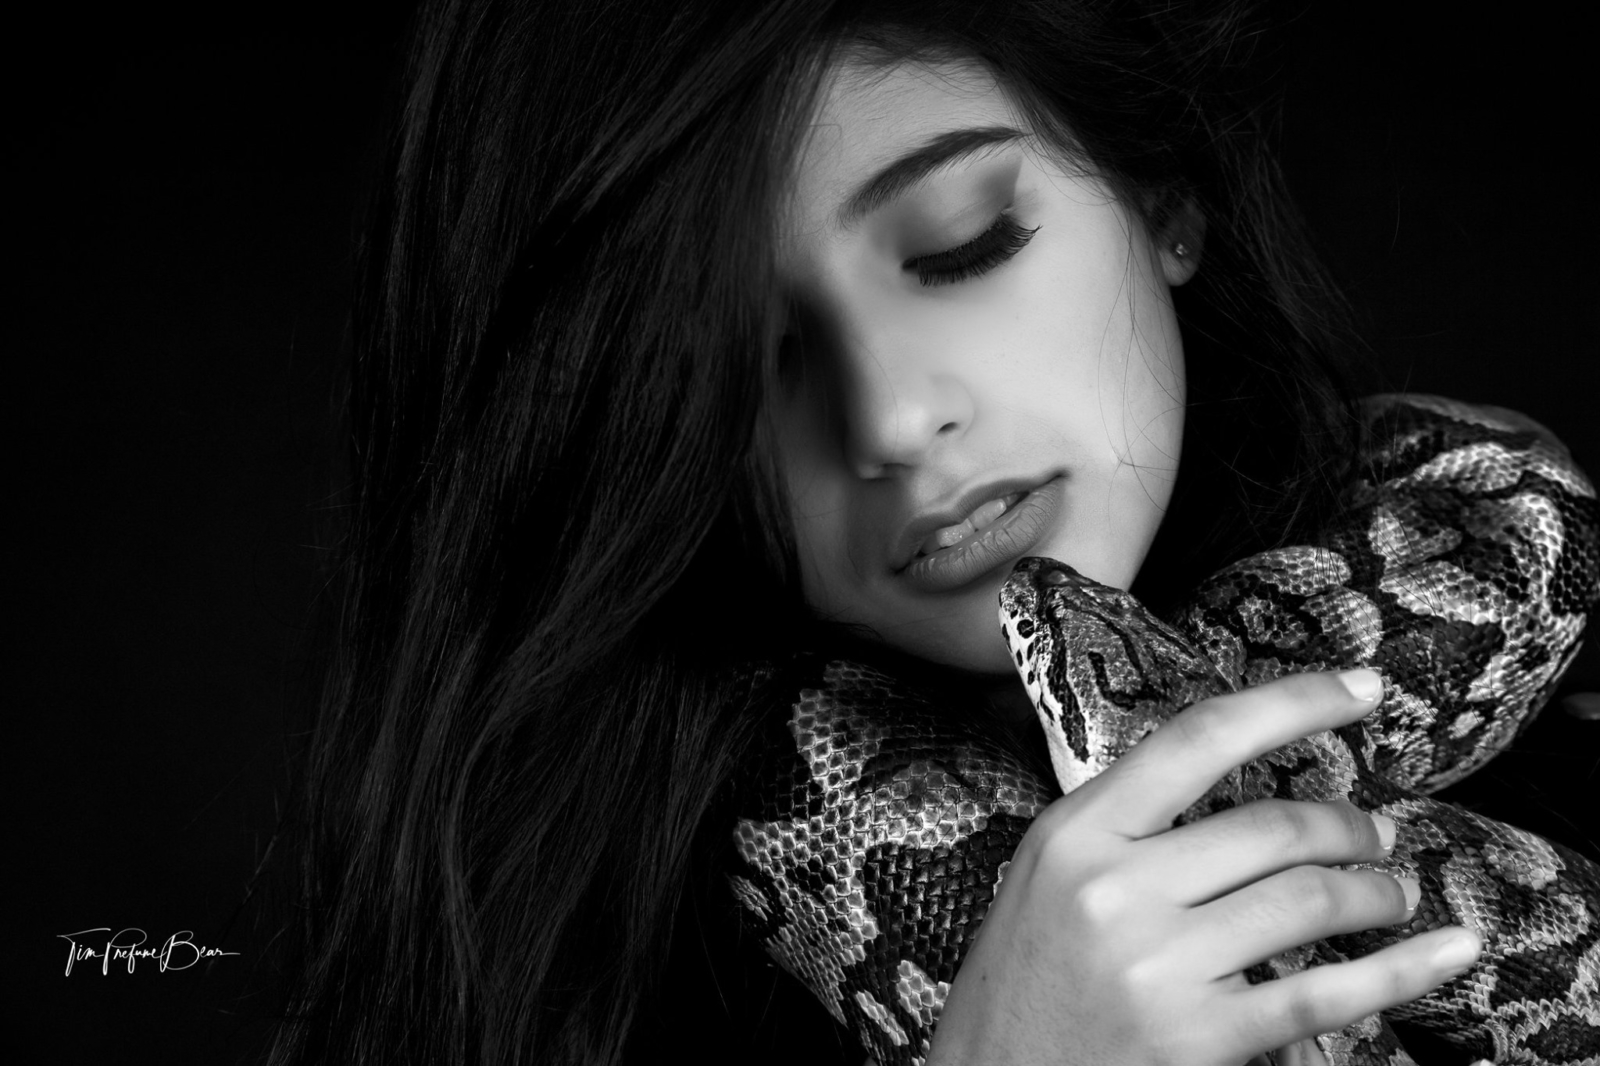 Kaylee Lartigue poses with a snake.